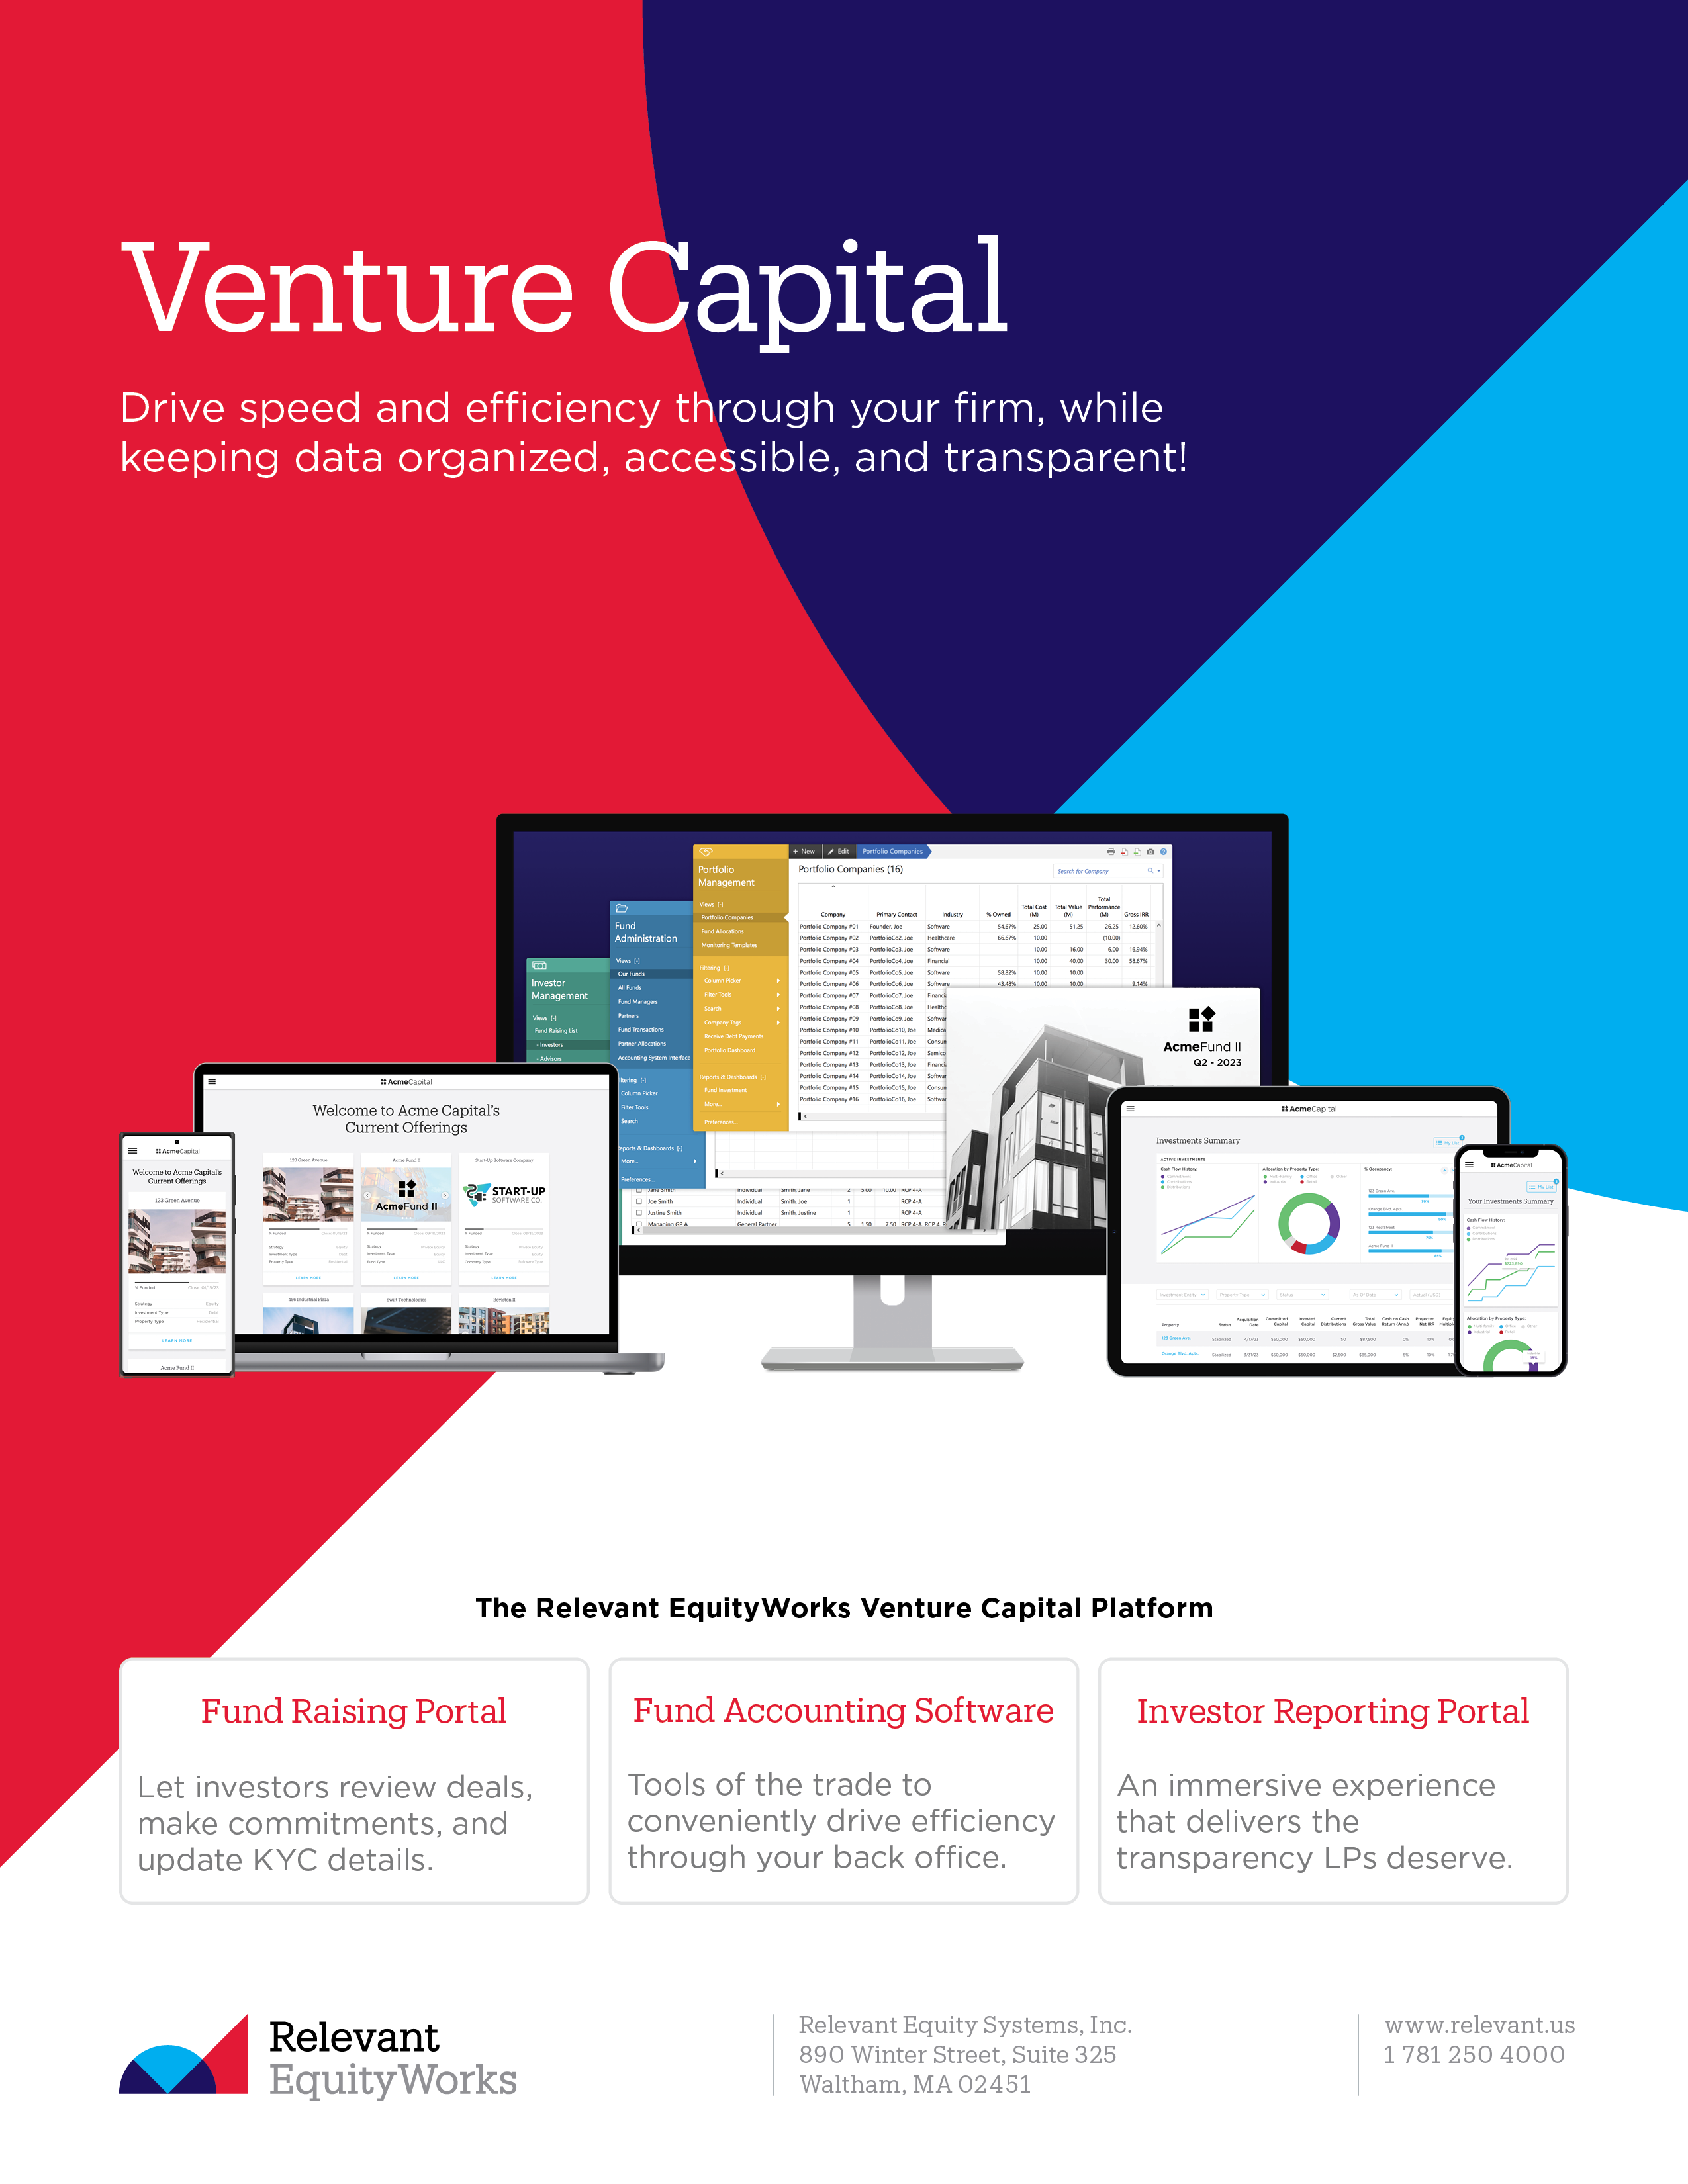 Relevant EquityWorks - Venture Capital Platform handout